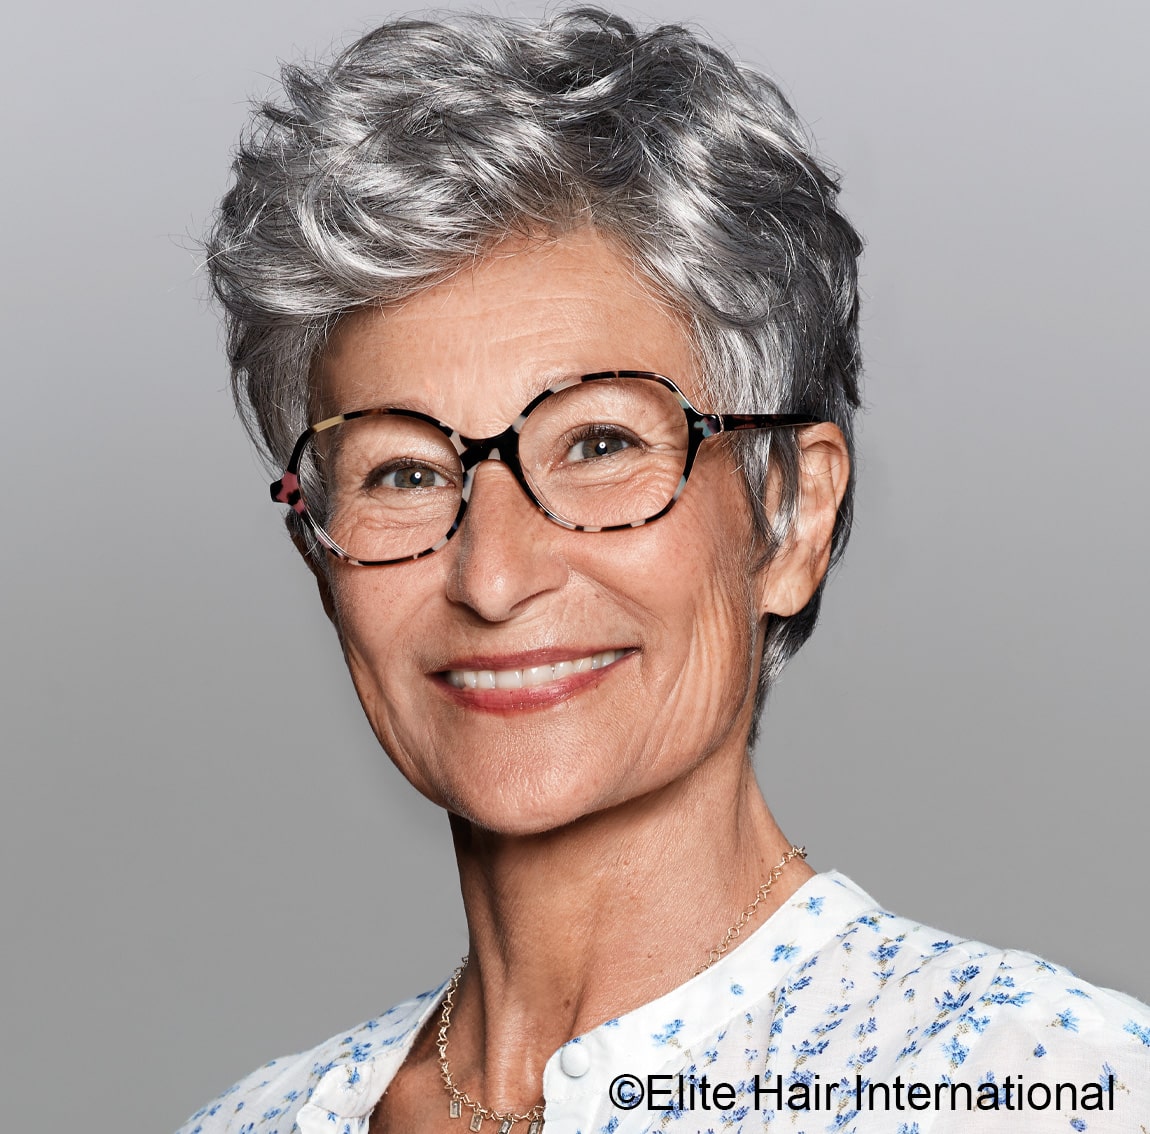 elegance lunettes perruque synthetique chimiotherapie elite hair international